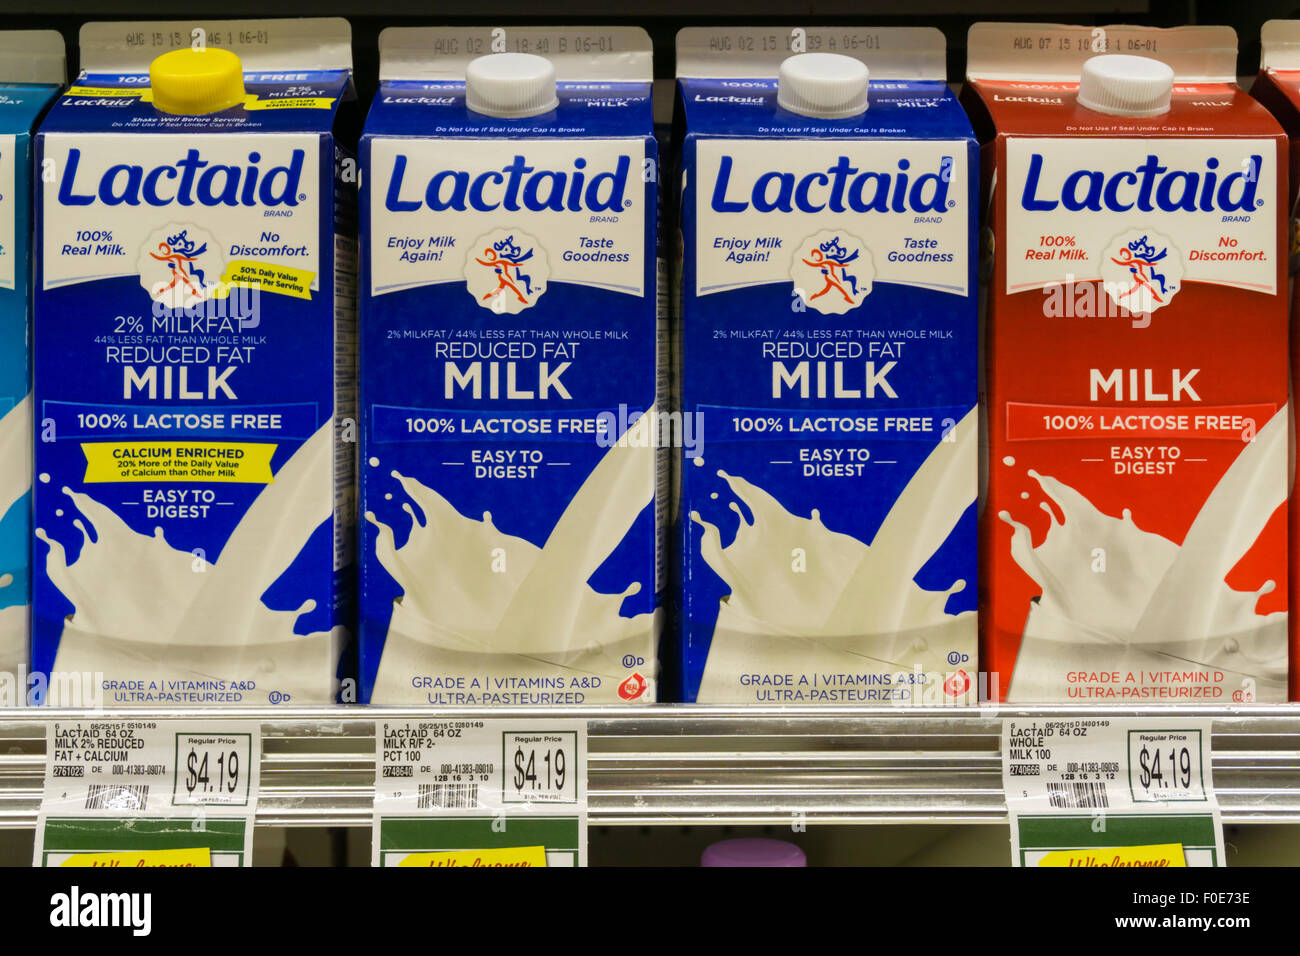 Cartones de leche lactaid, 100% libre de lactosa, leche en venta. Foto de stock